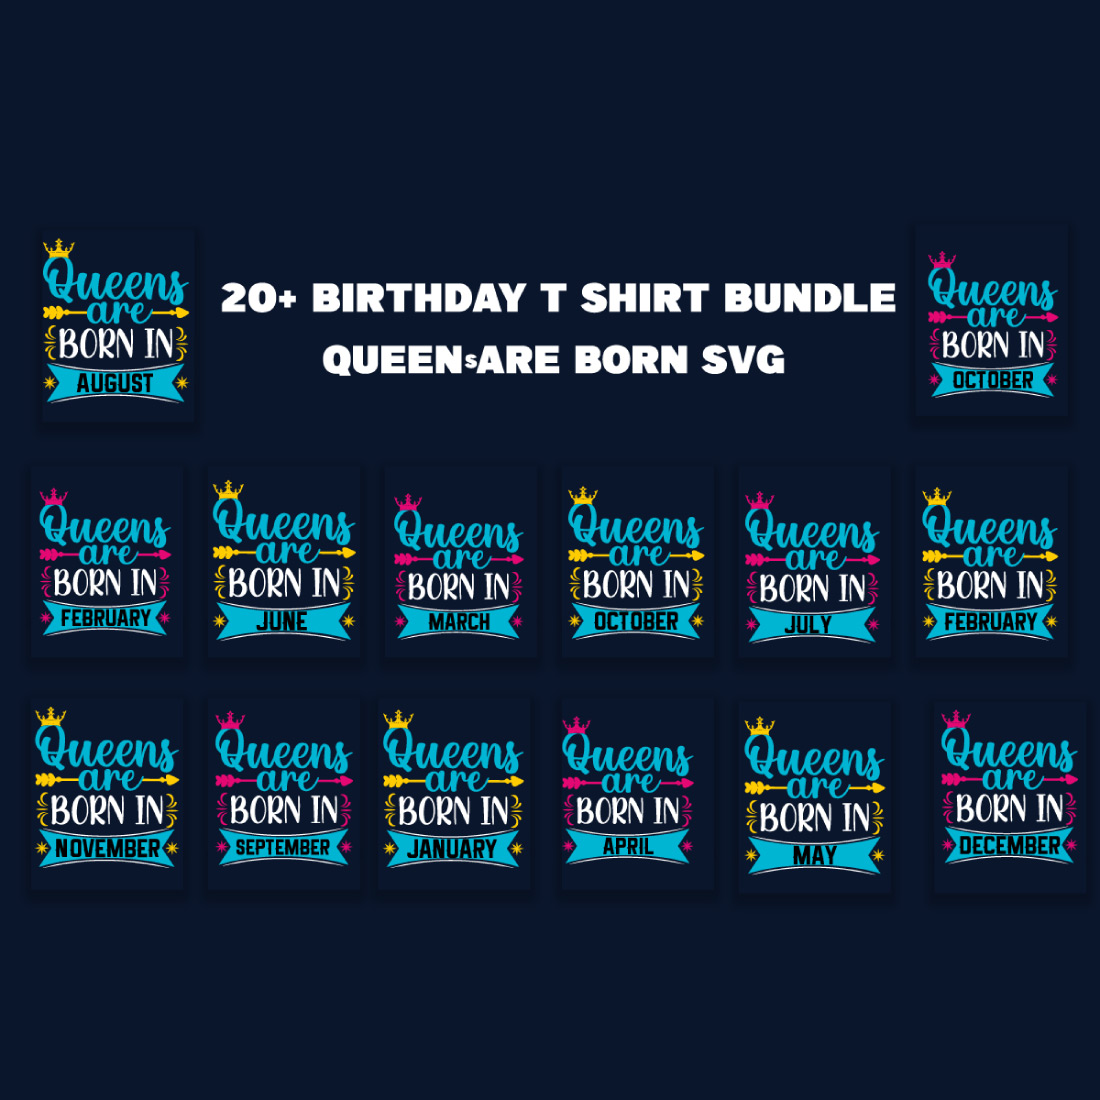 Birthday T-Shirt Bundle preview image.